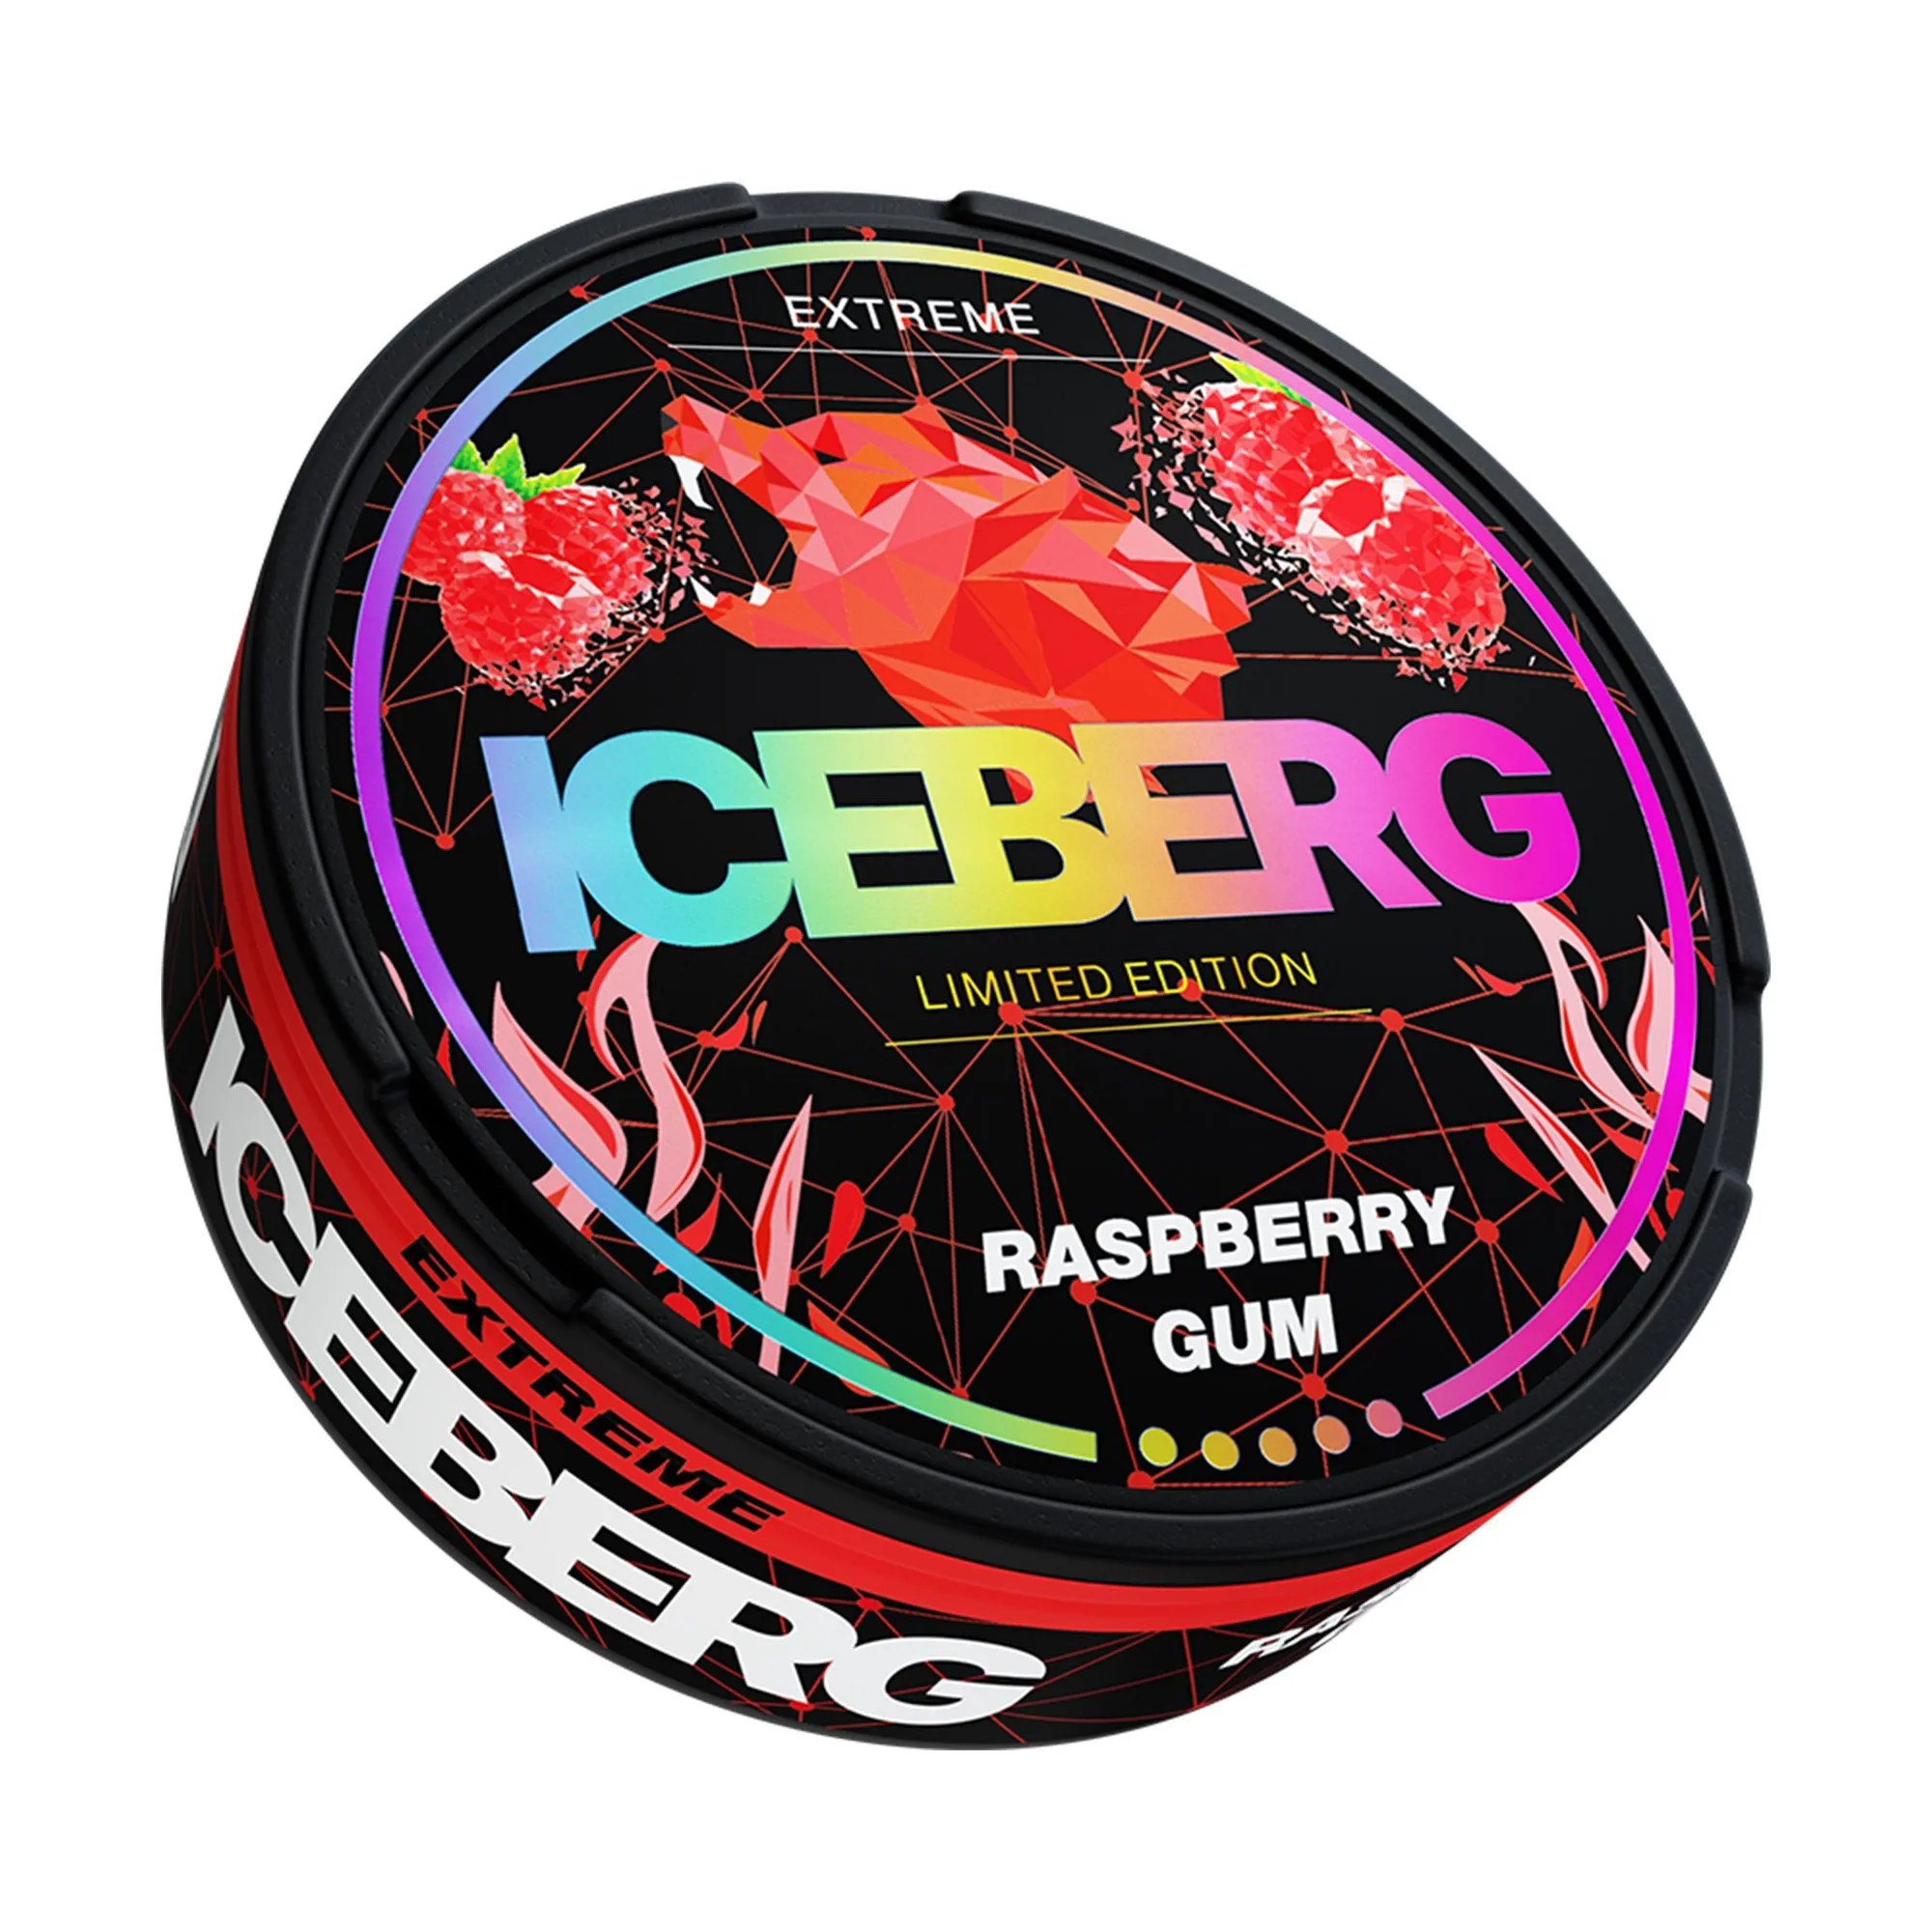 Iceberg Raspberry Gum